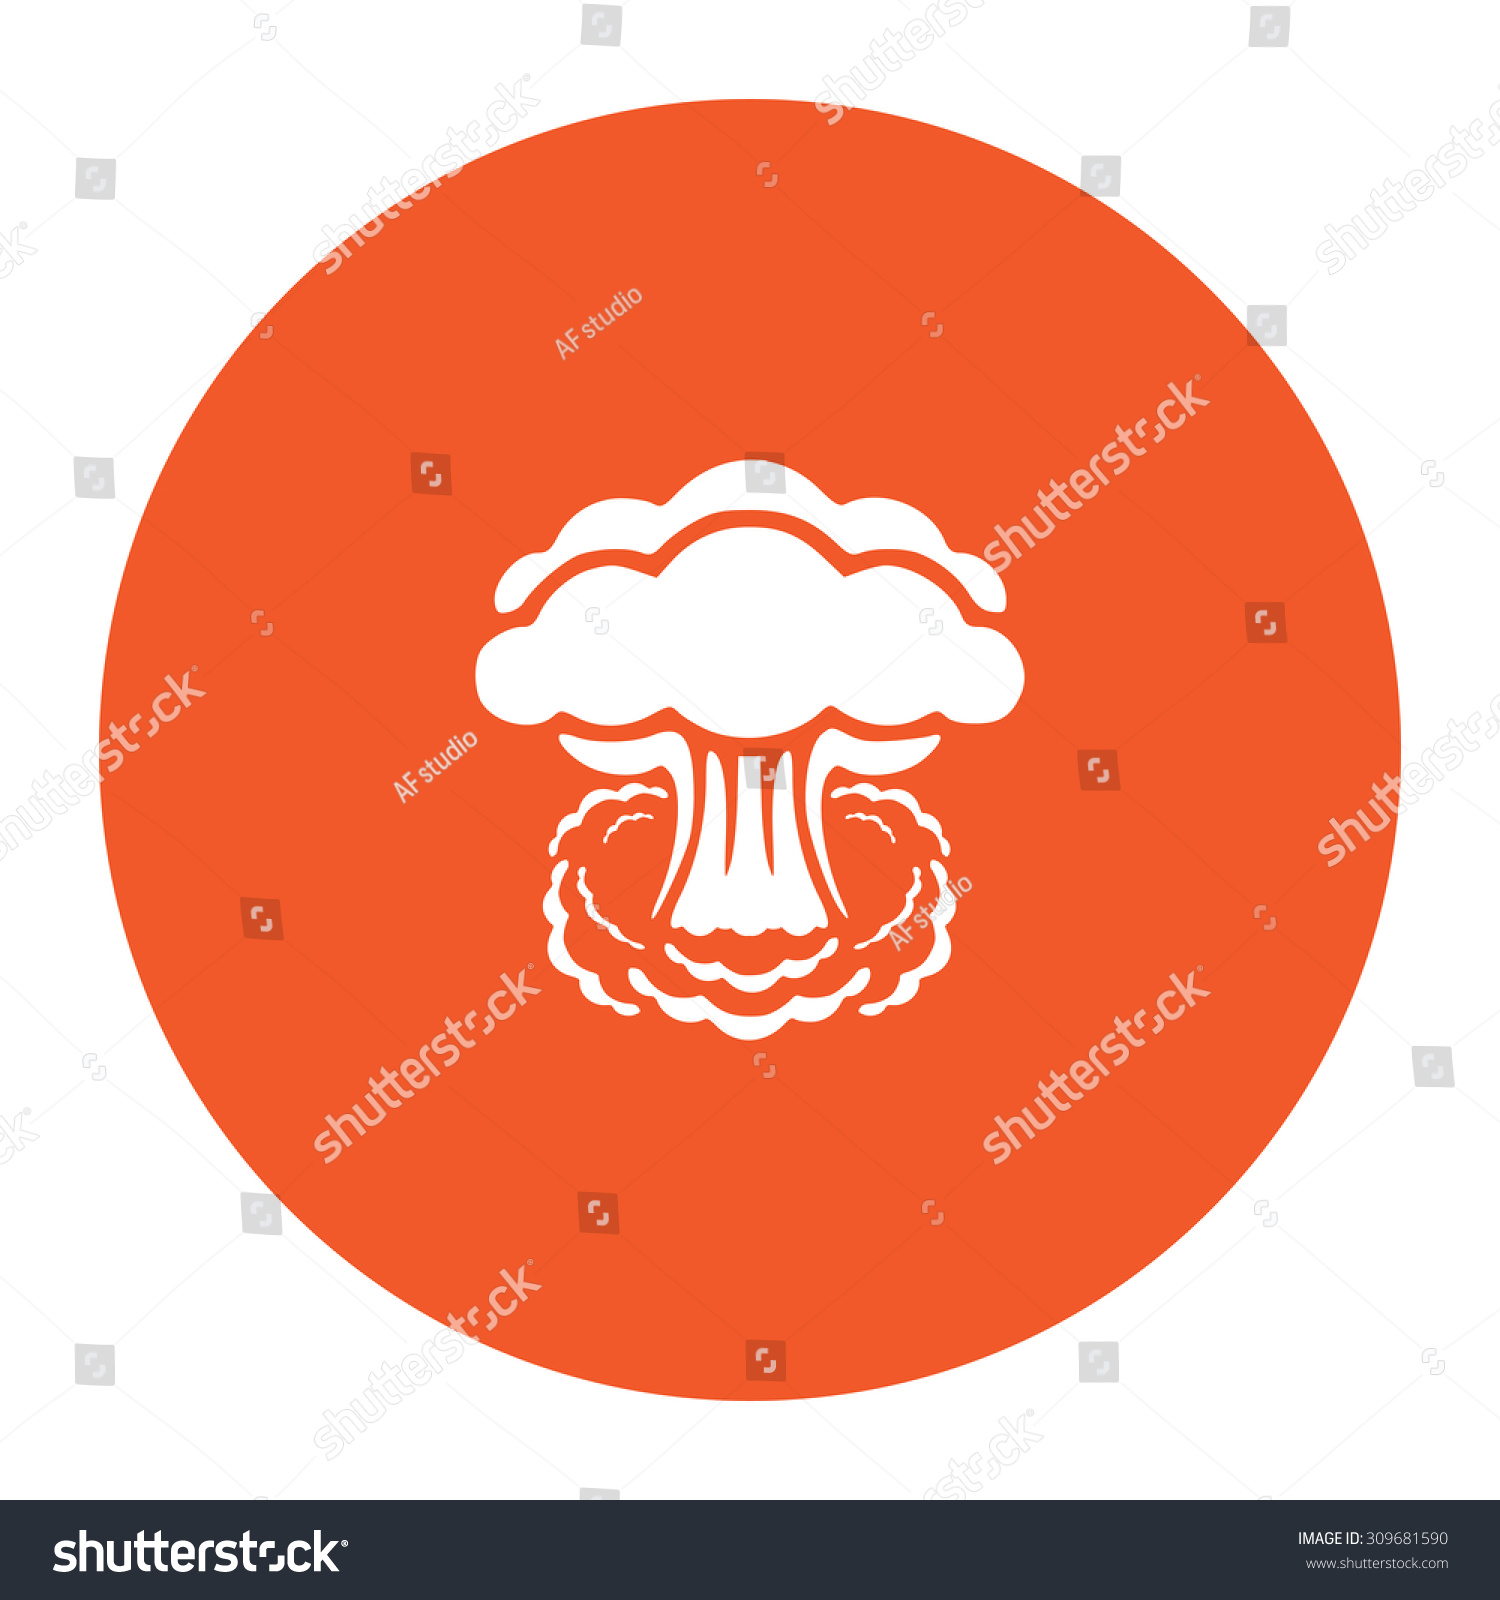 Atomic, blast, bomb, cloud, explosion, hazard, nuclear, smoke icon 